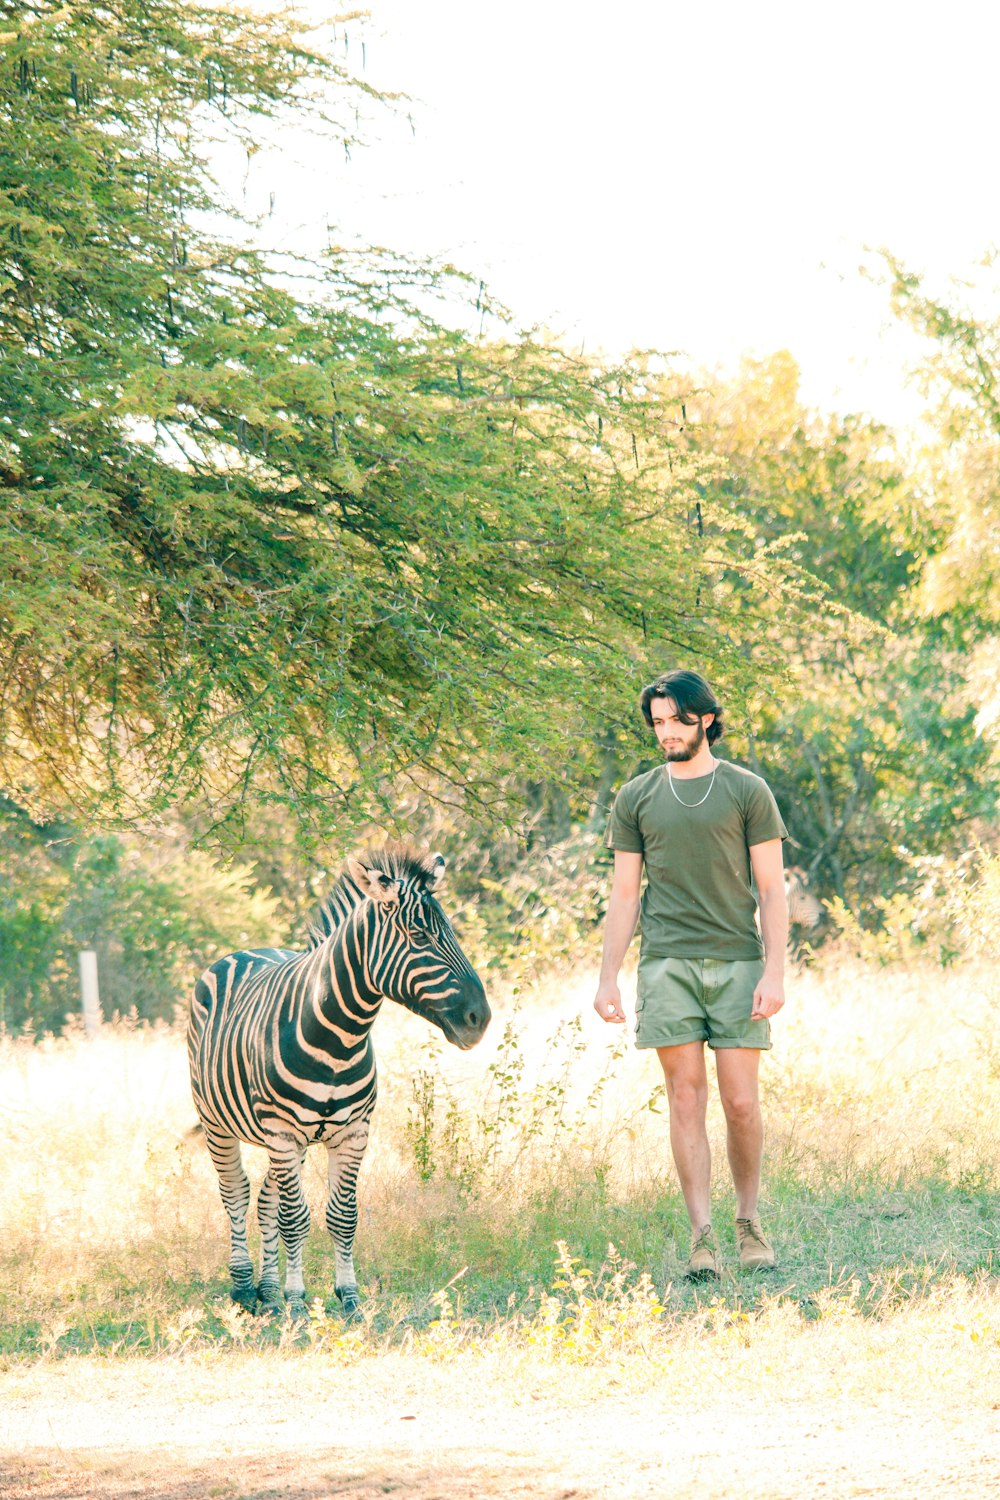 a man standing next to a zebra in a field